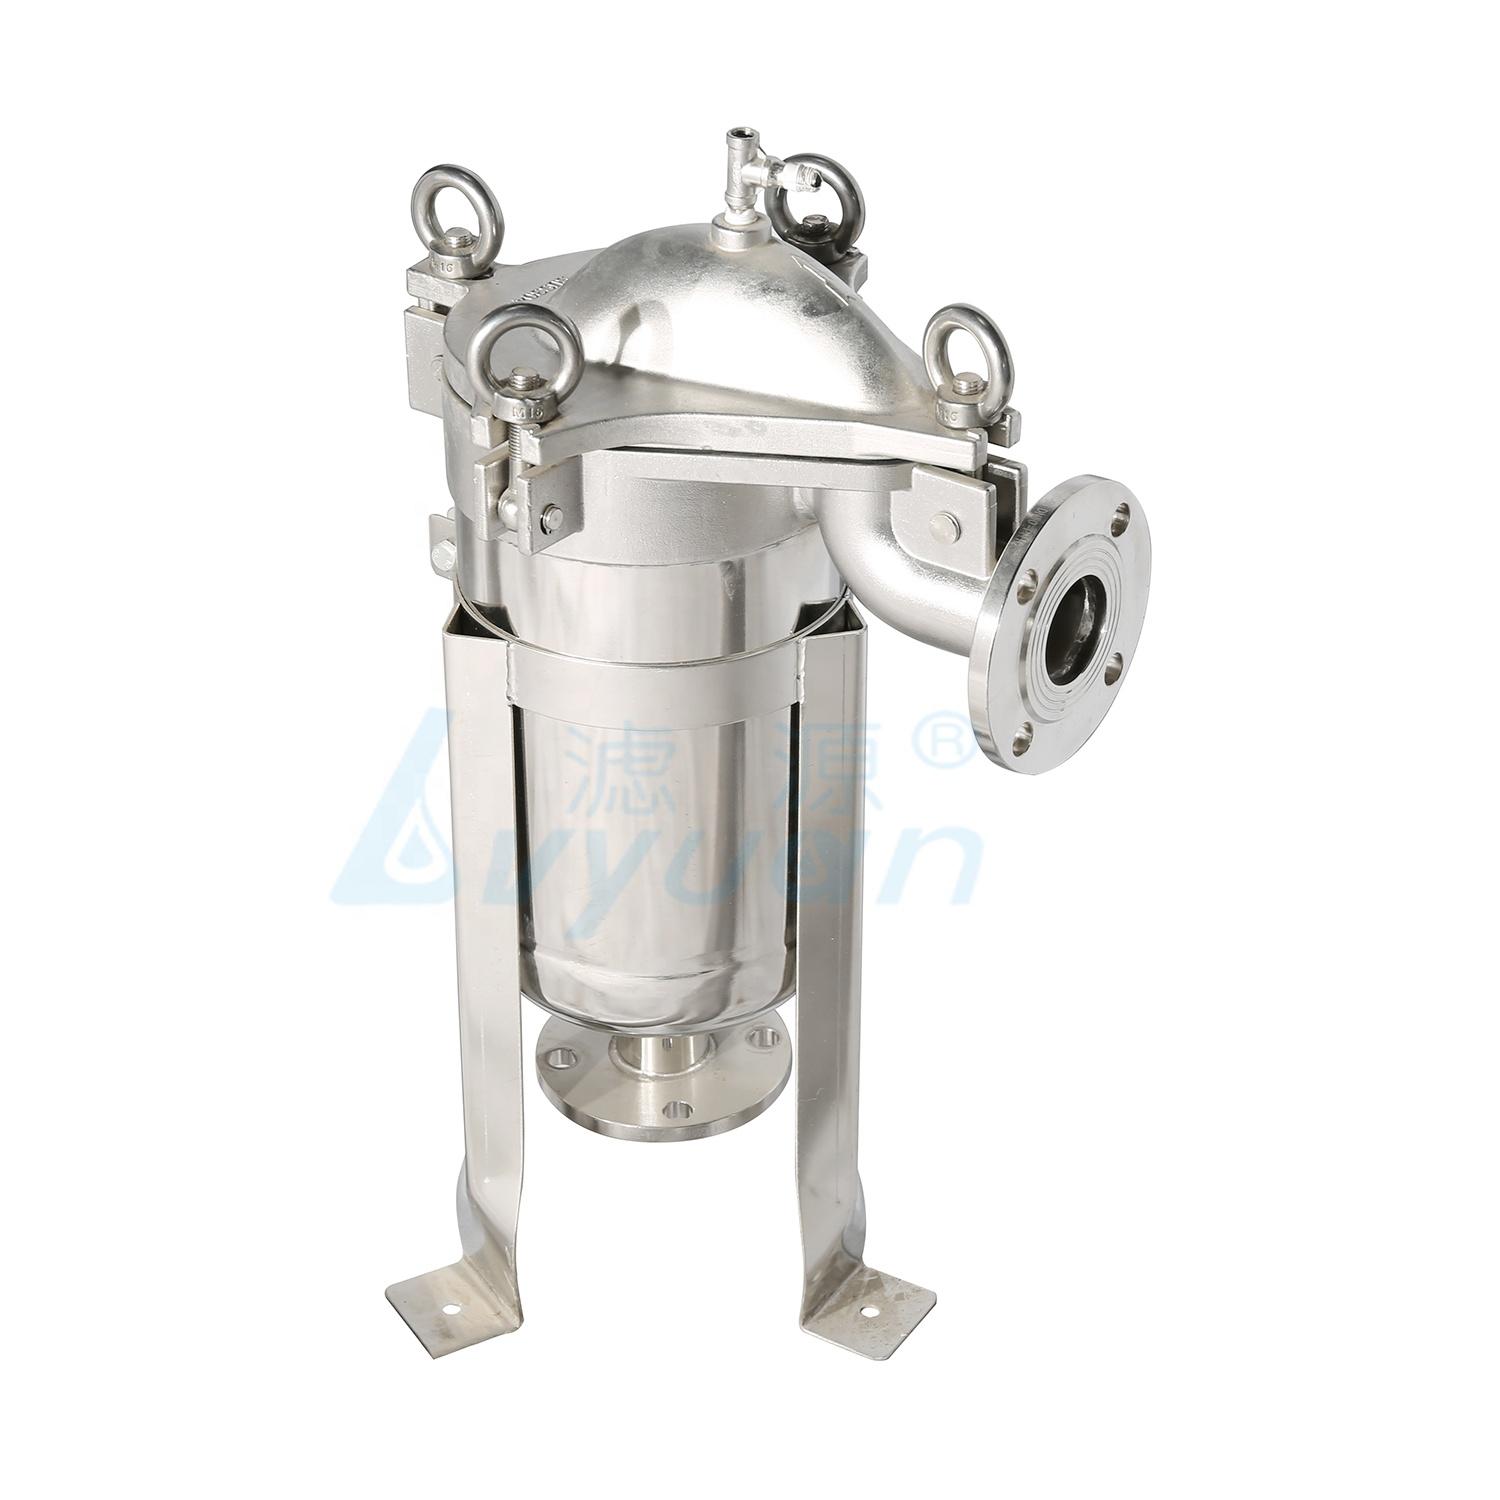 stainless steel liquid ss304 bag filter/bag filter housing filter bag size 2 for water filtration